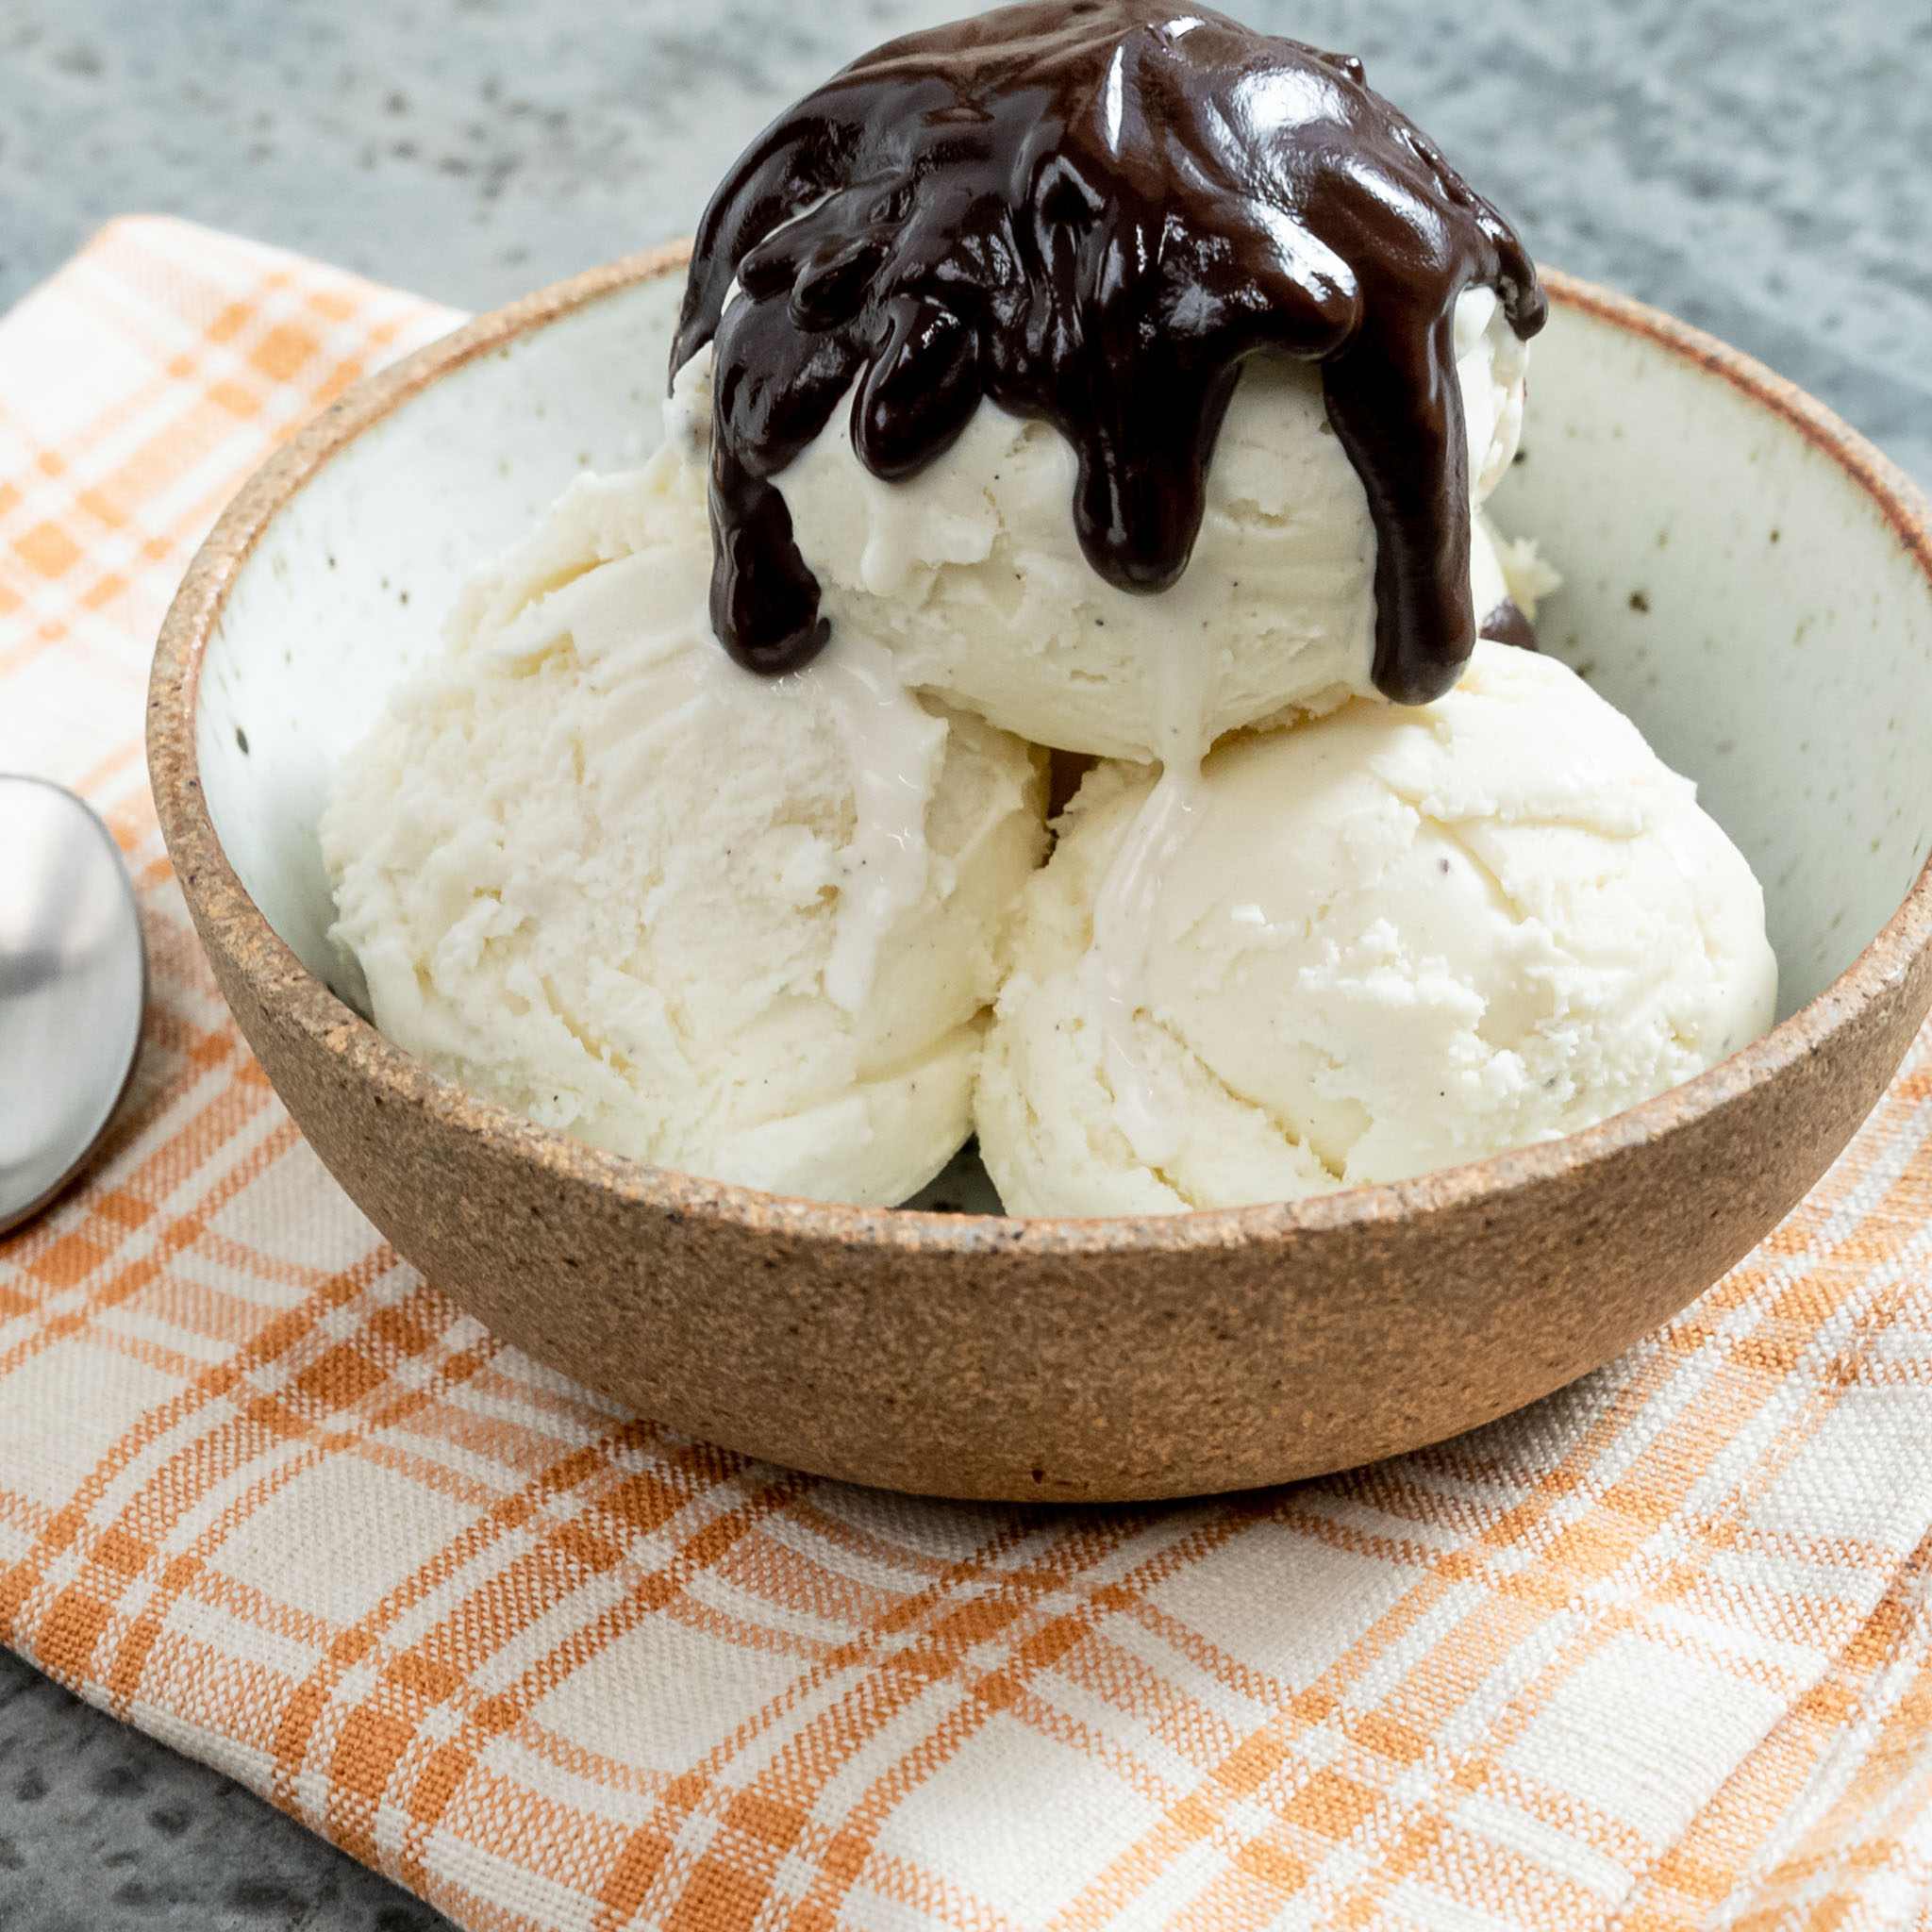 New Ice Cream Maker and Easy Homemade Ice Cream Vanilla Recipe - Nesting  With Grace